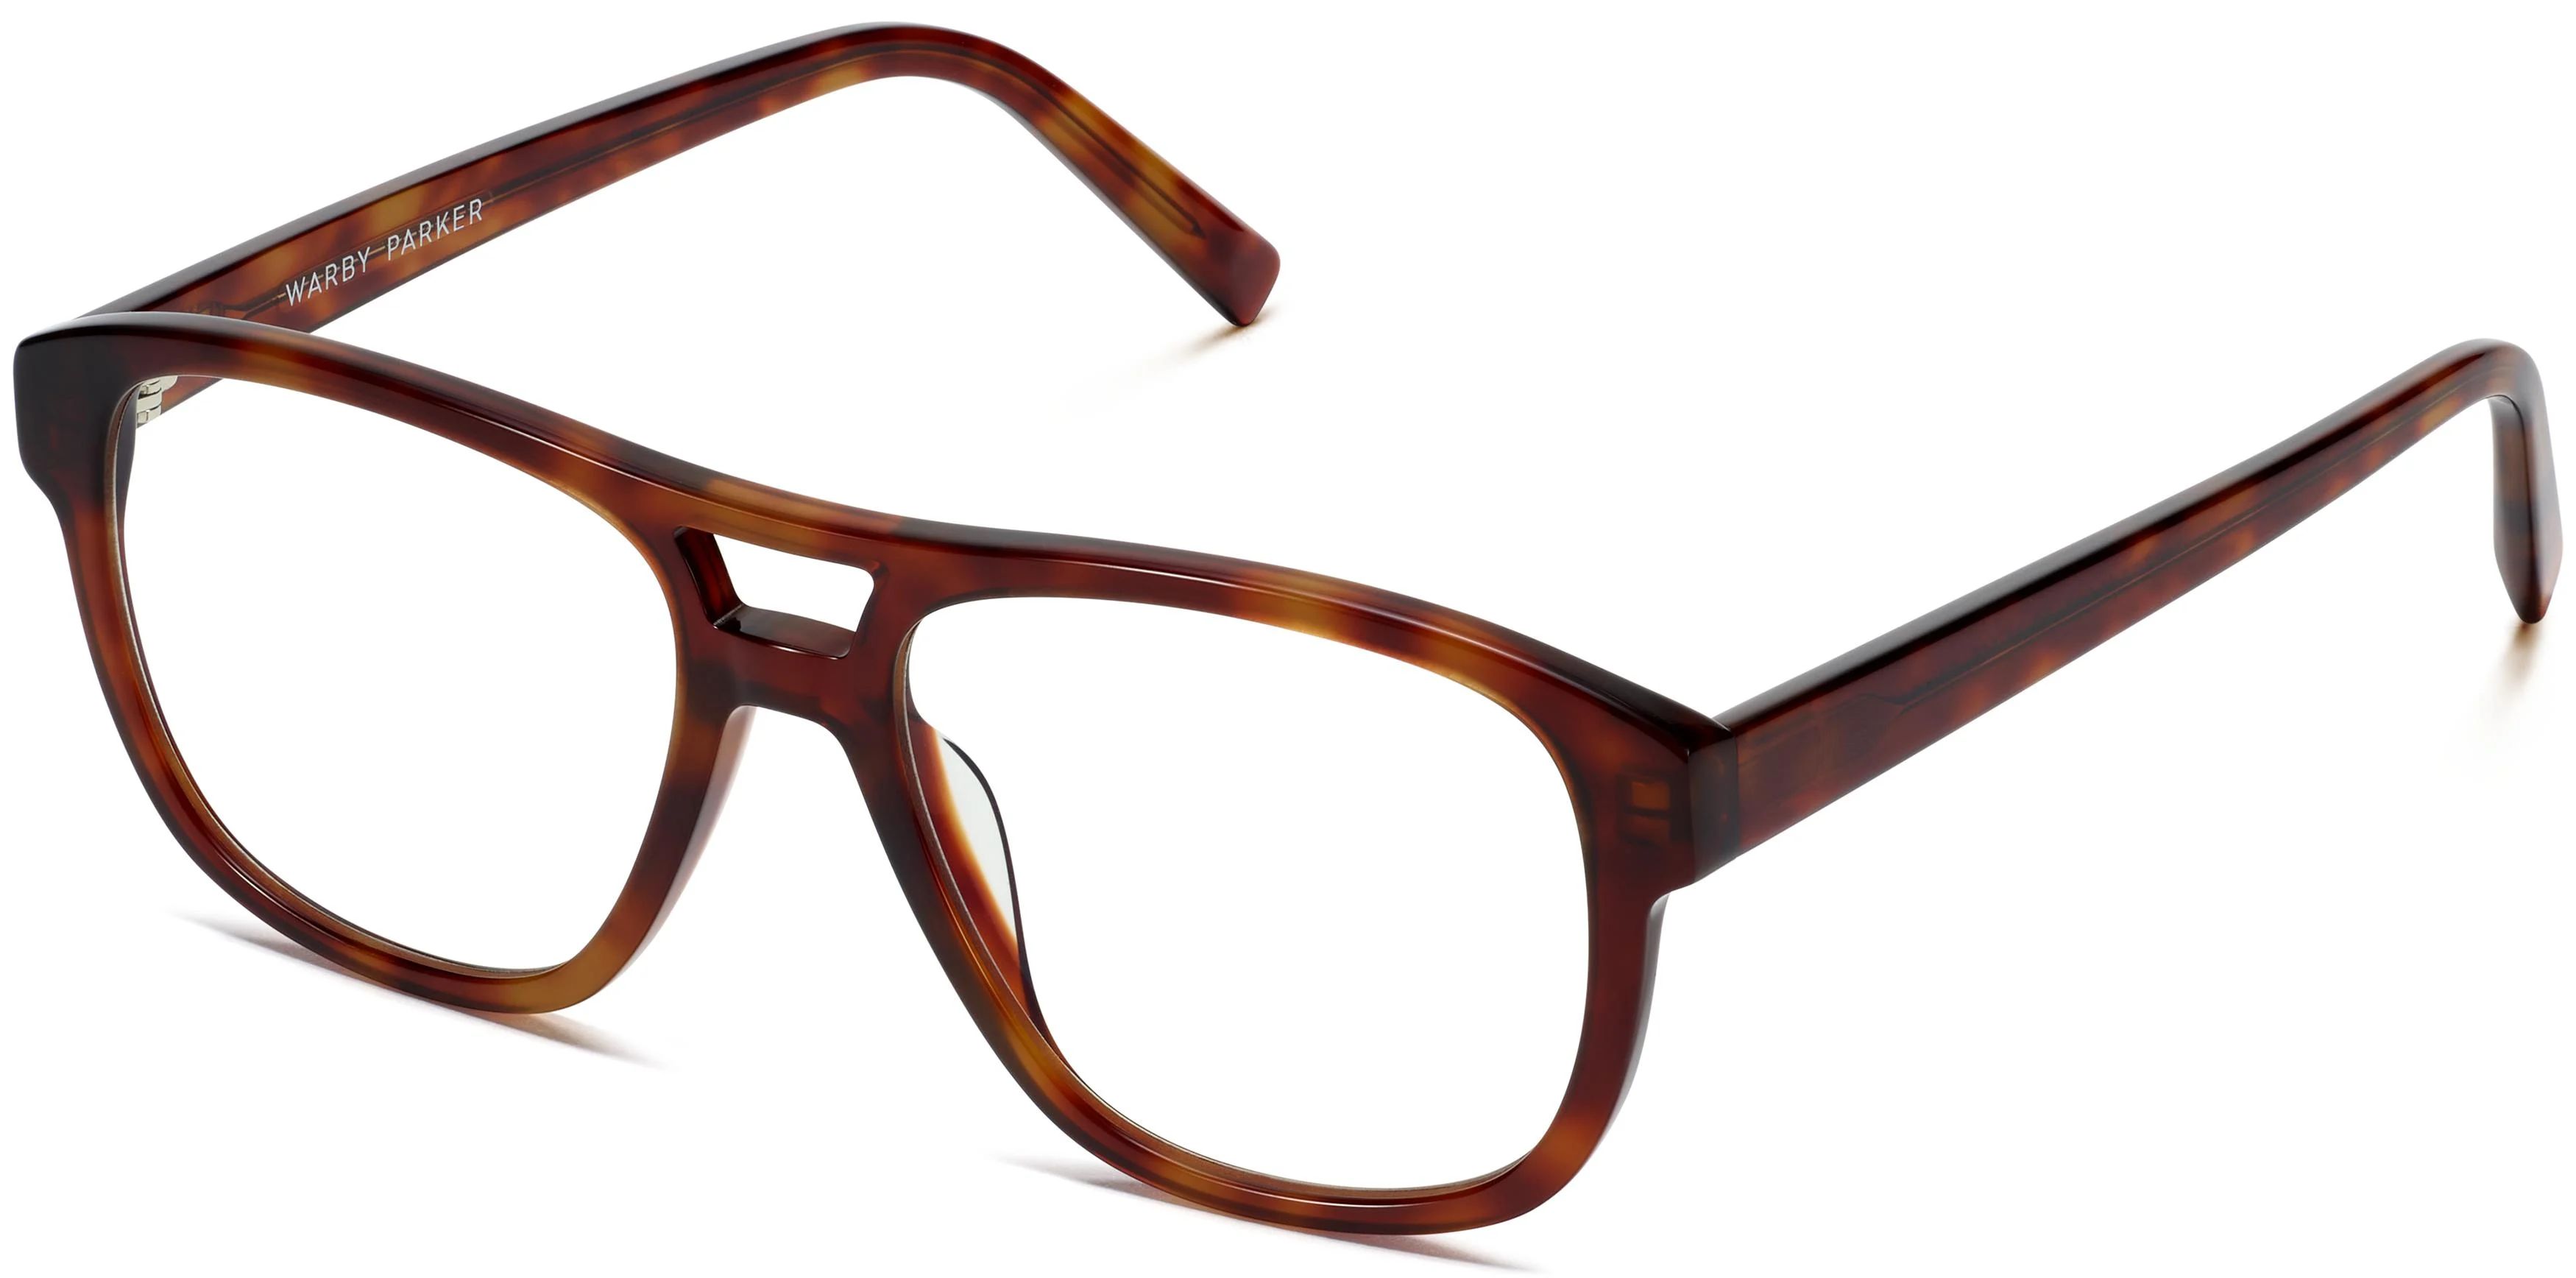 Ortega Eyeglasses in Peppercorn Tortoise | Warby Parker | Warby Parker (US)